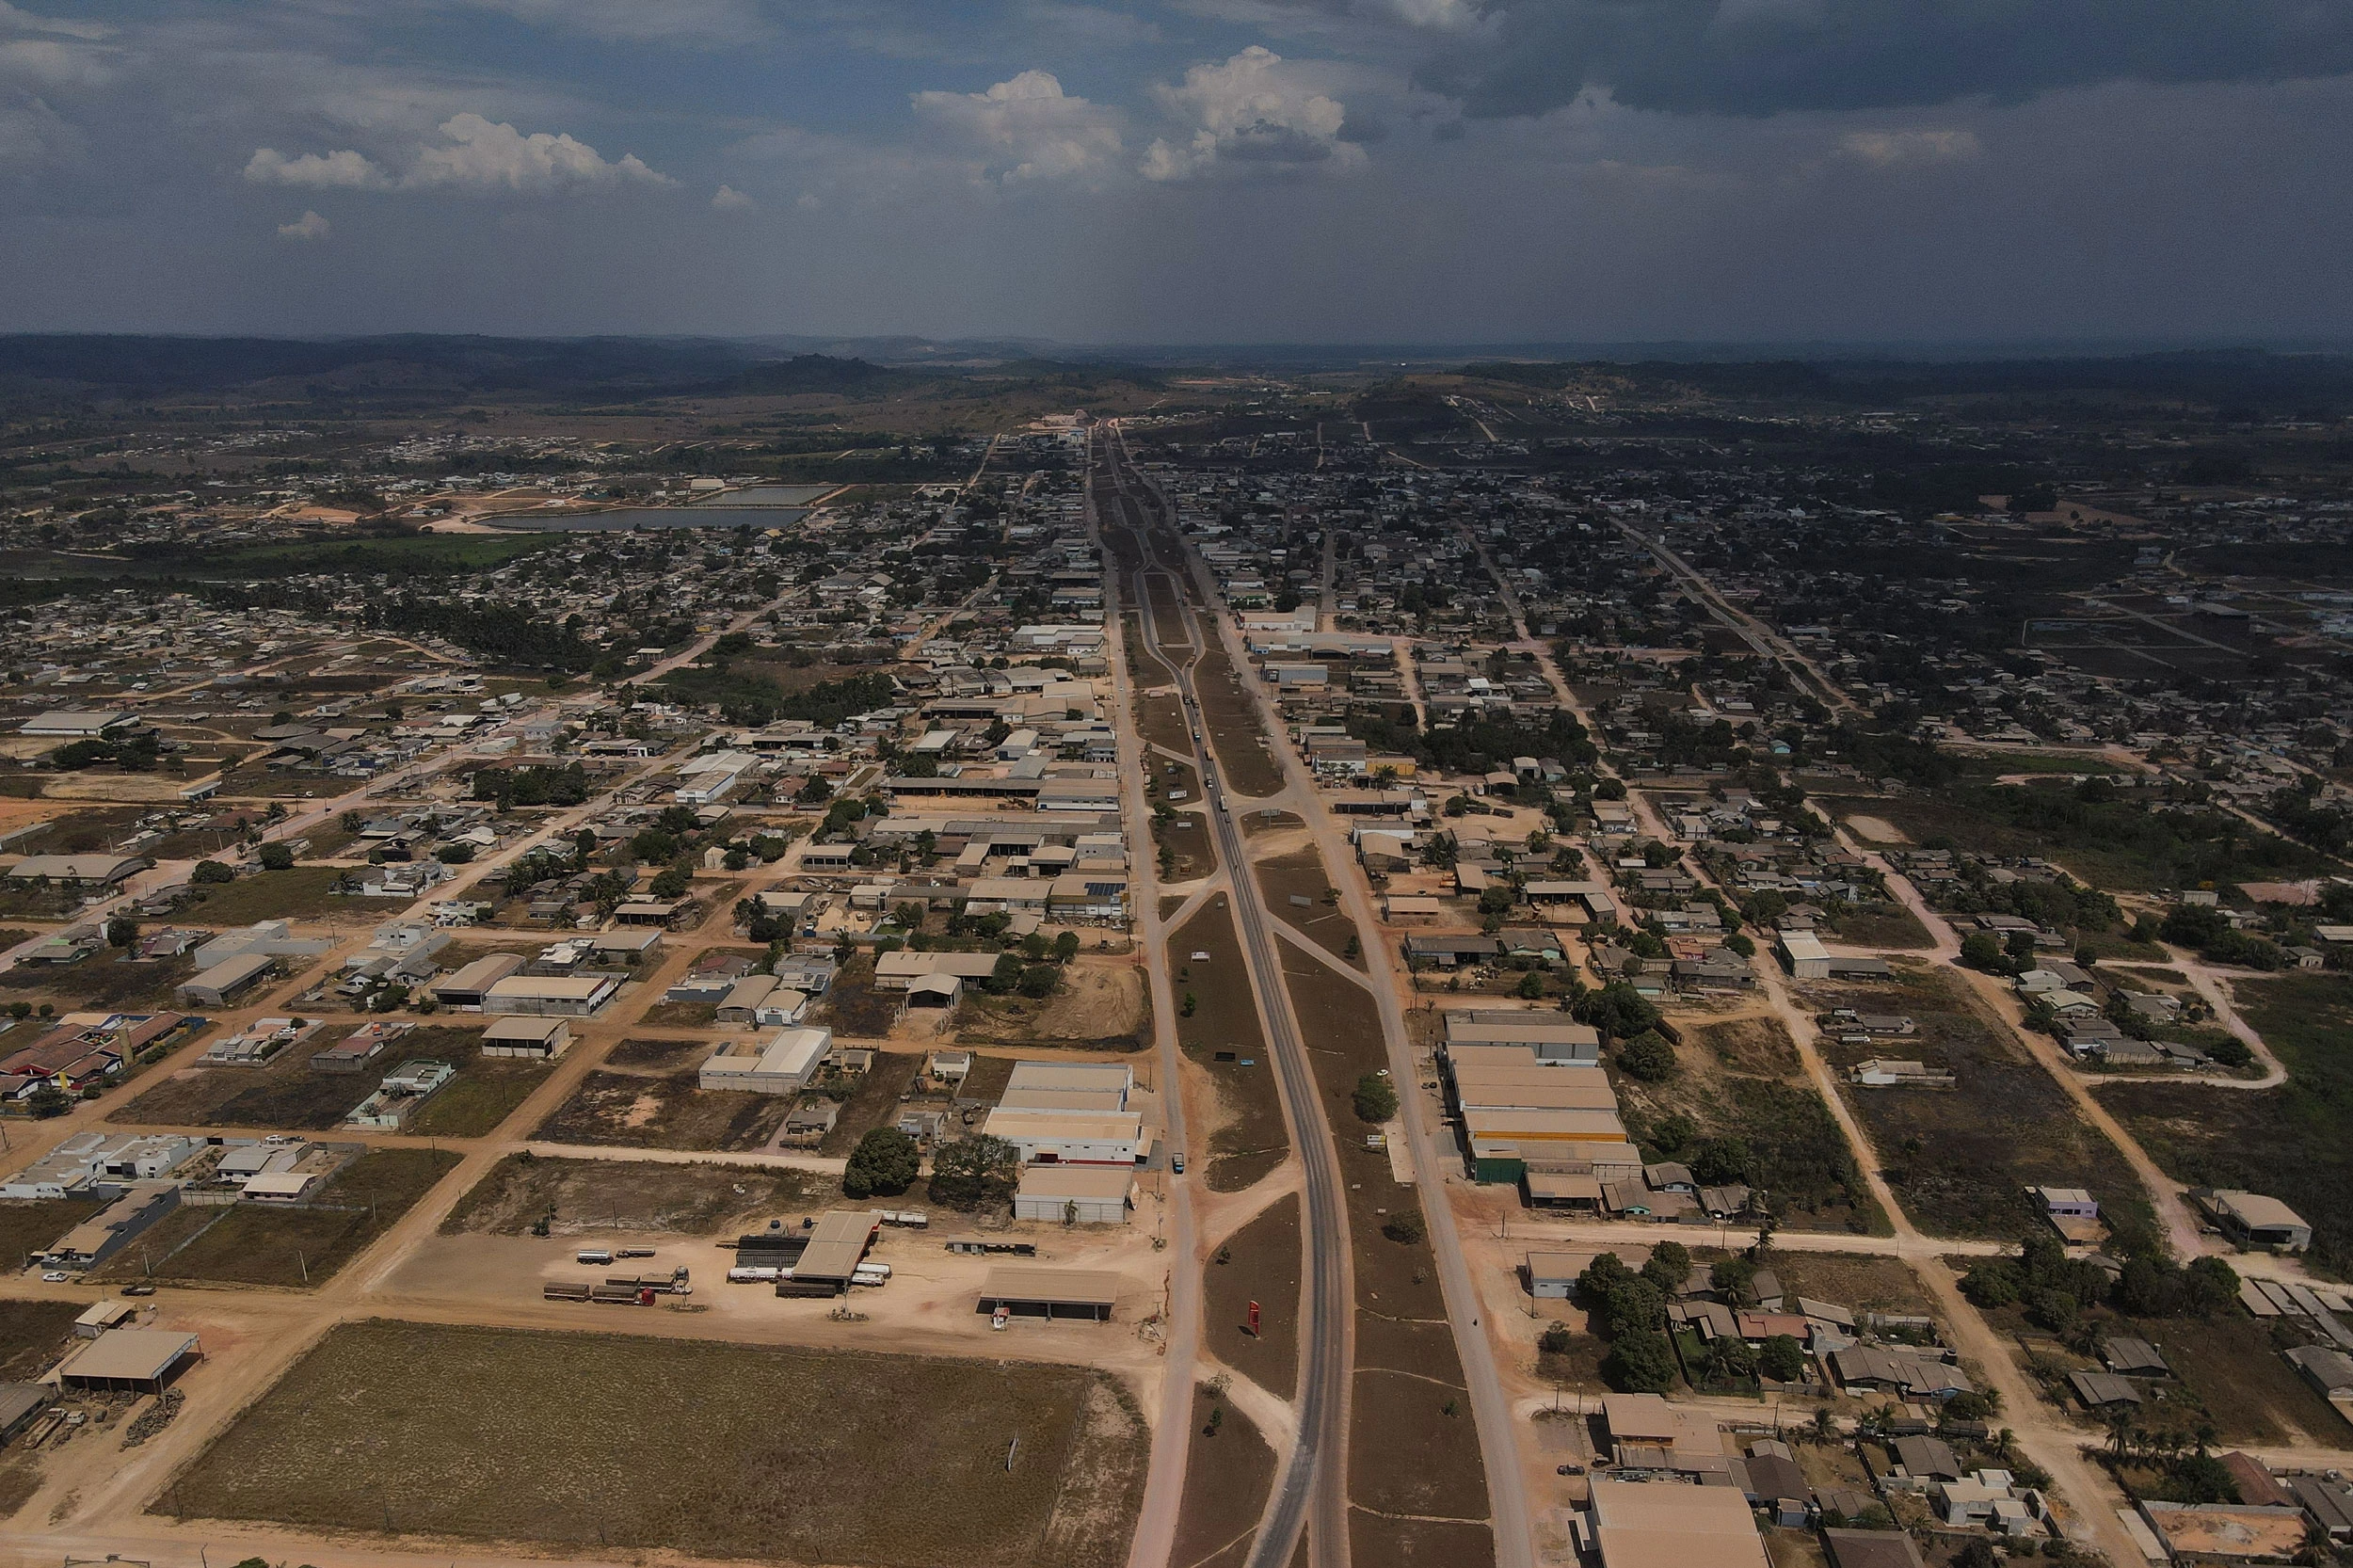 Vista aerea de Novo Progresso, Pará.